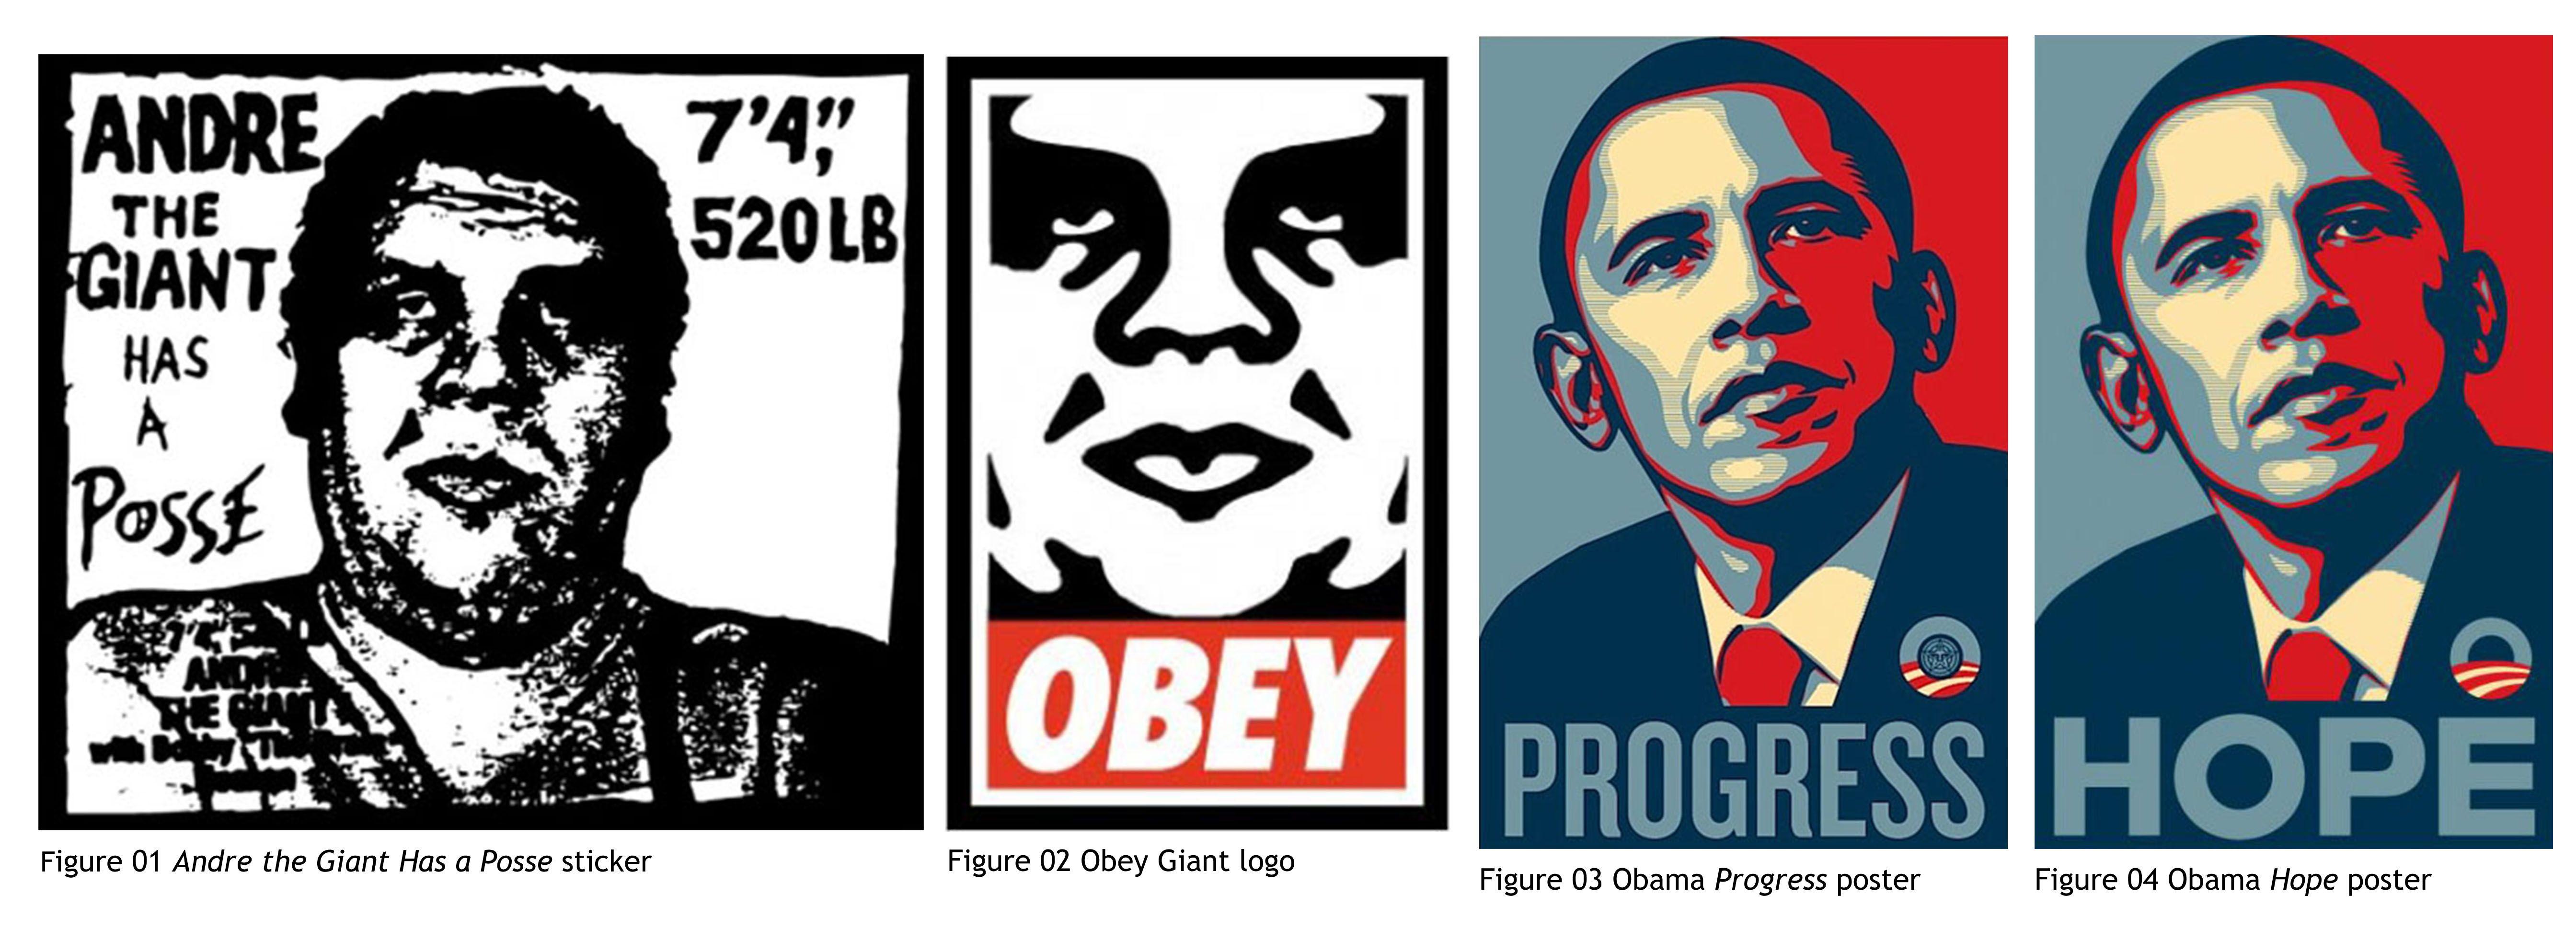 Andre the Giant Obey Logo - andre the giant obey poster shepard fairey copy1